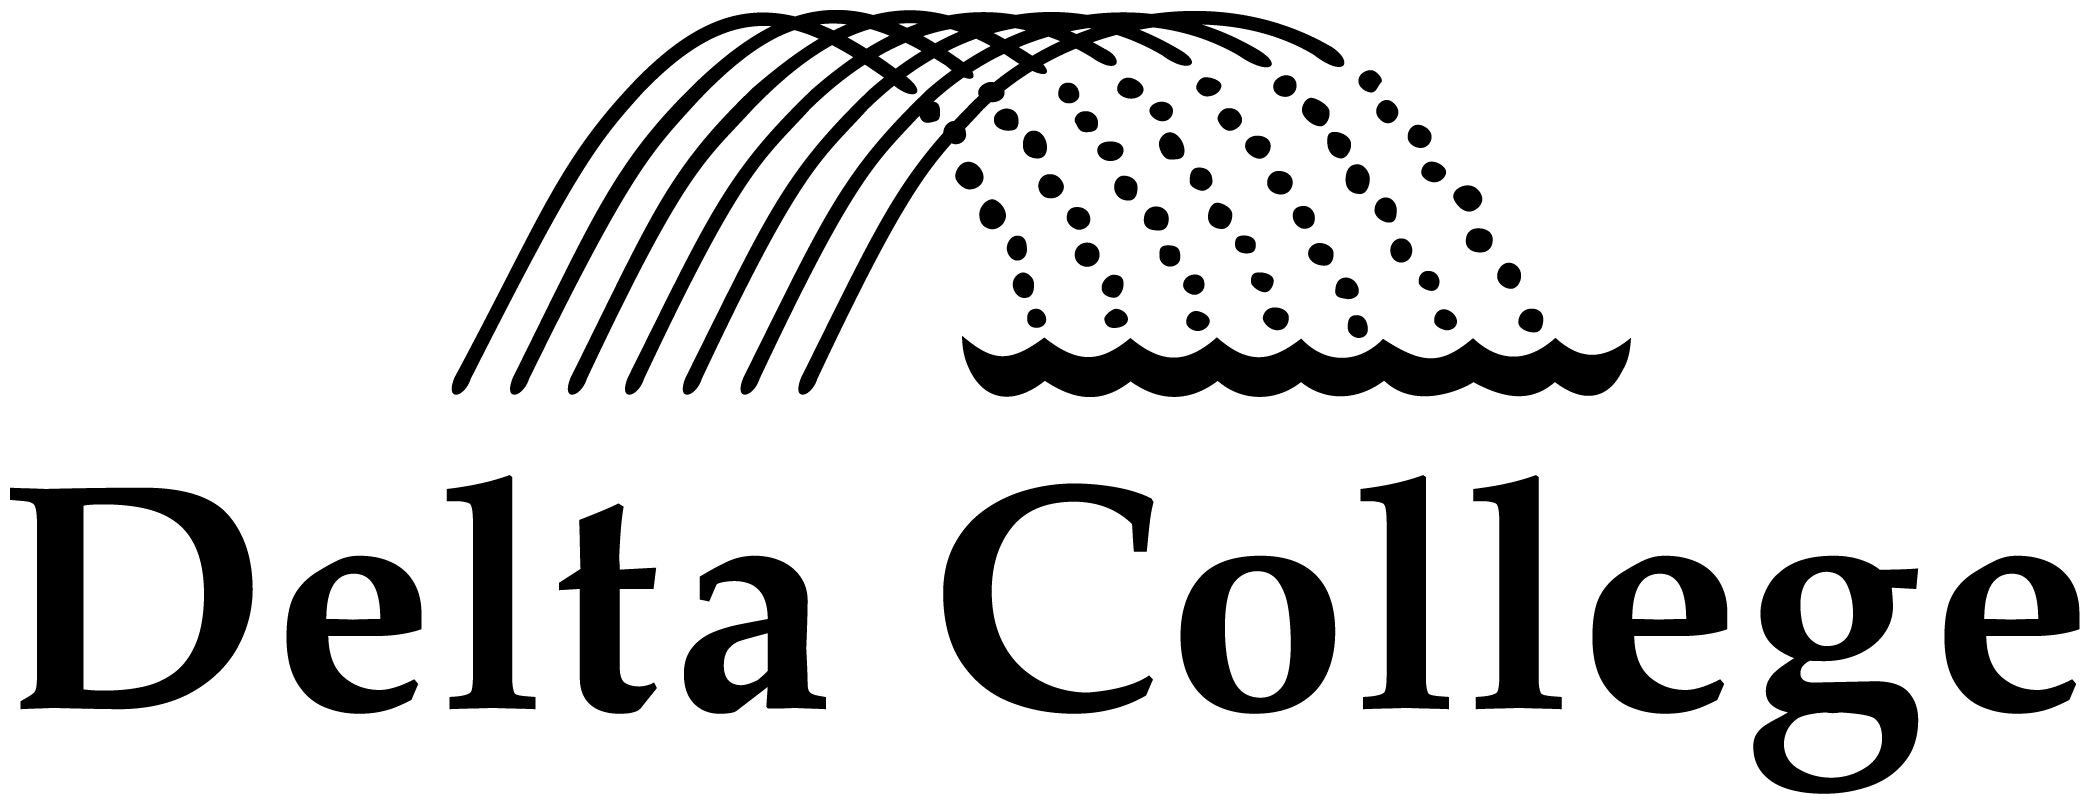 Delta College logo - black